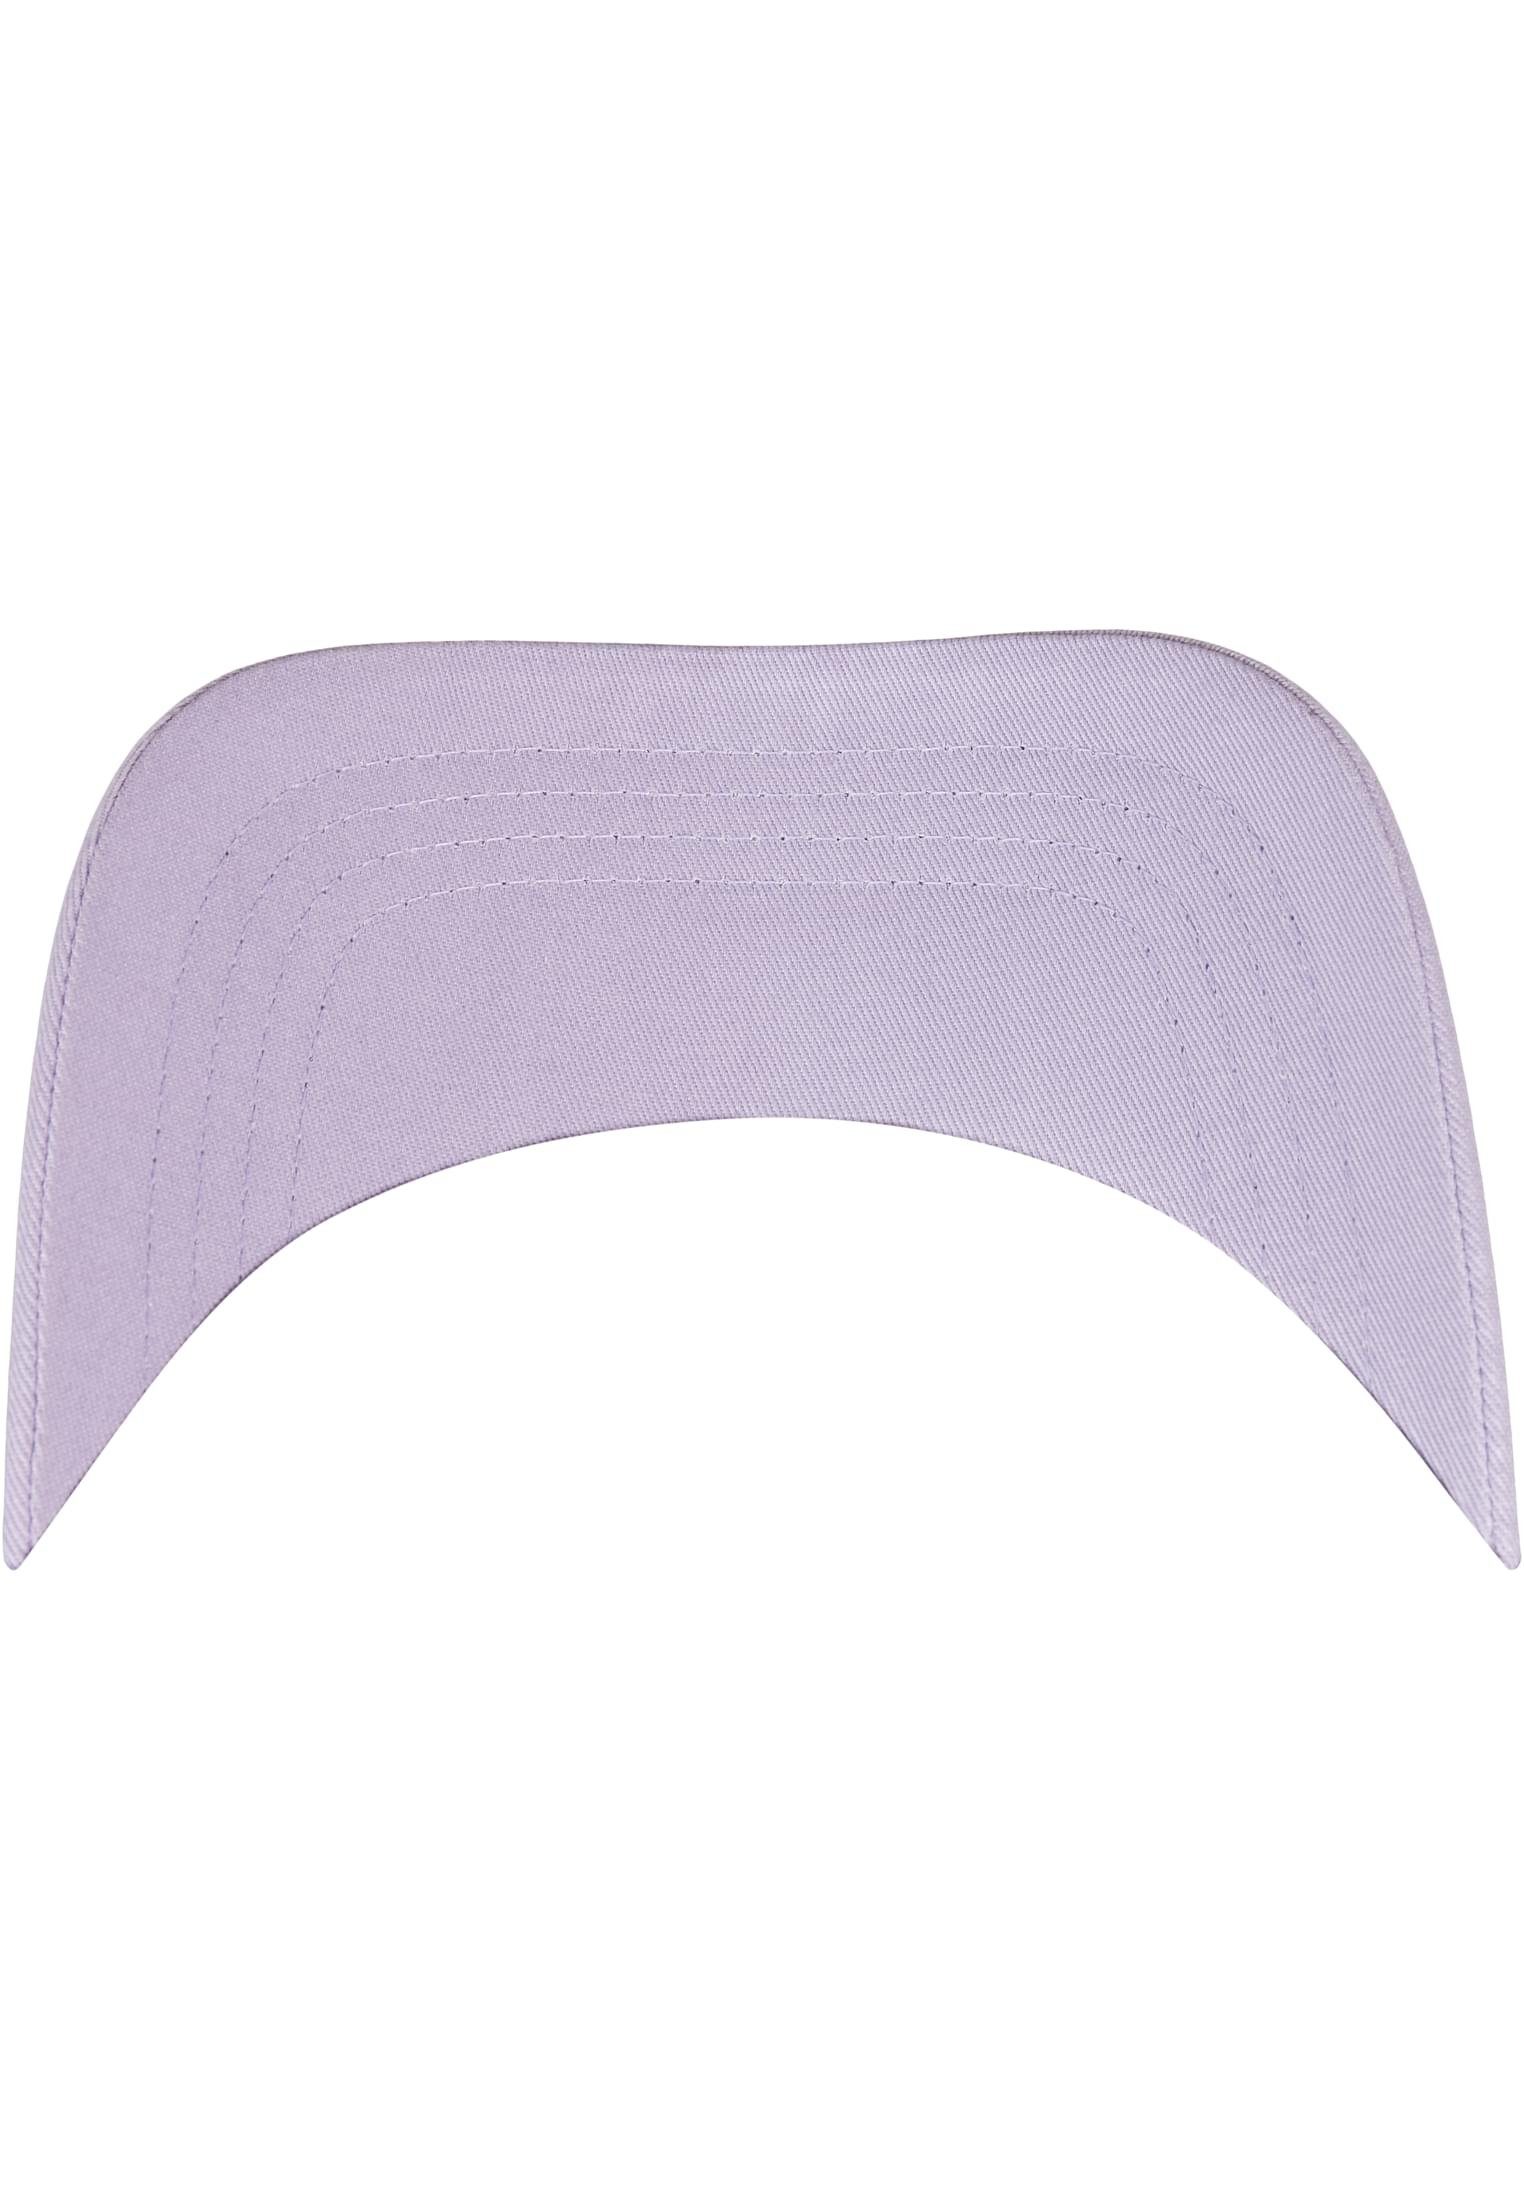 Flexfit Flex Cap Accessoires Cap lilac Curved Visor